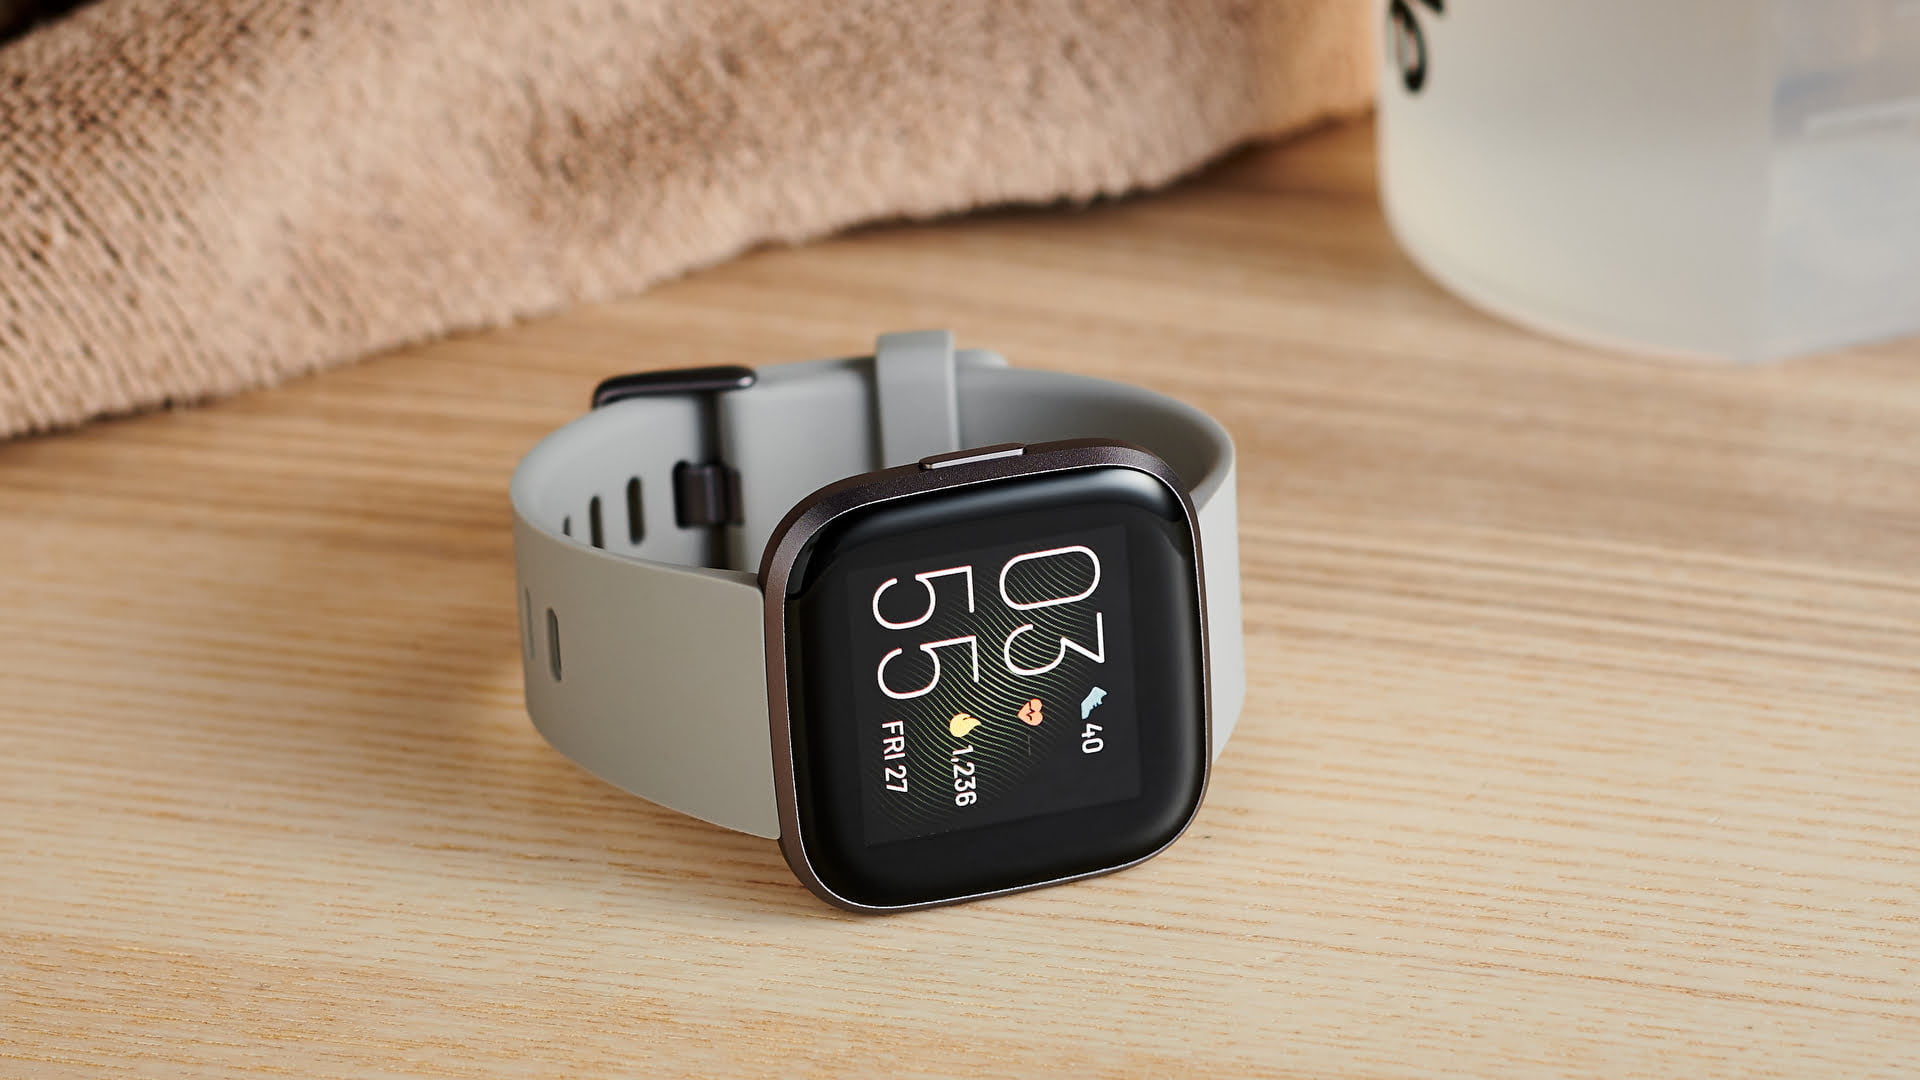 Fitbit Versa 2 swimming digital watch.